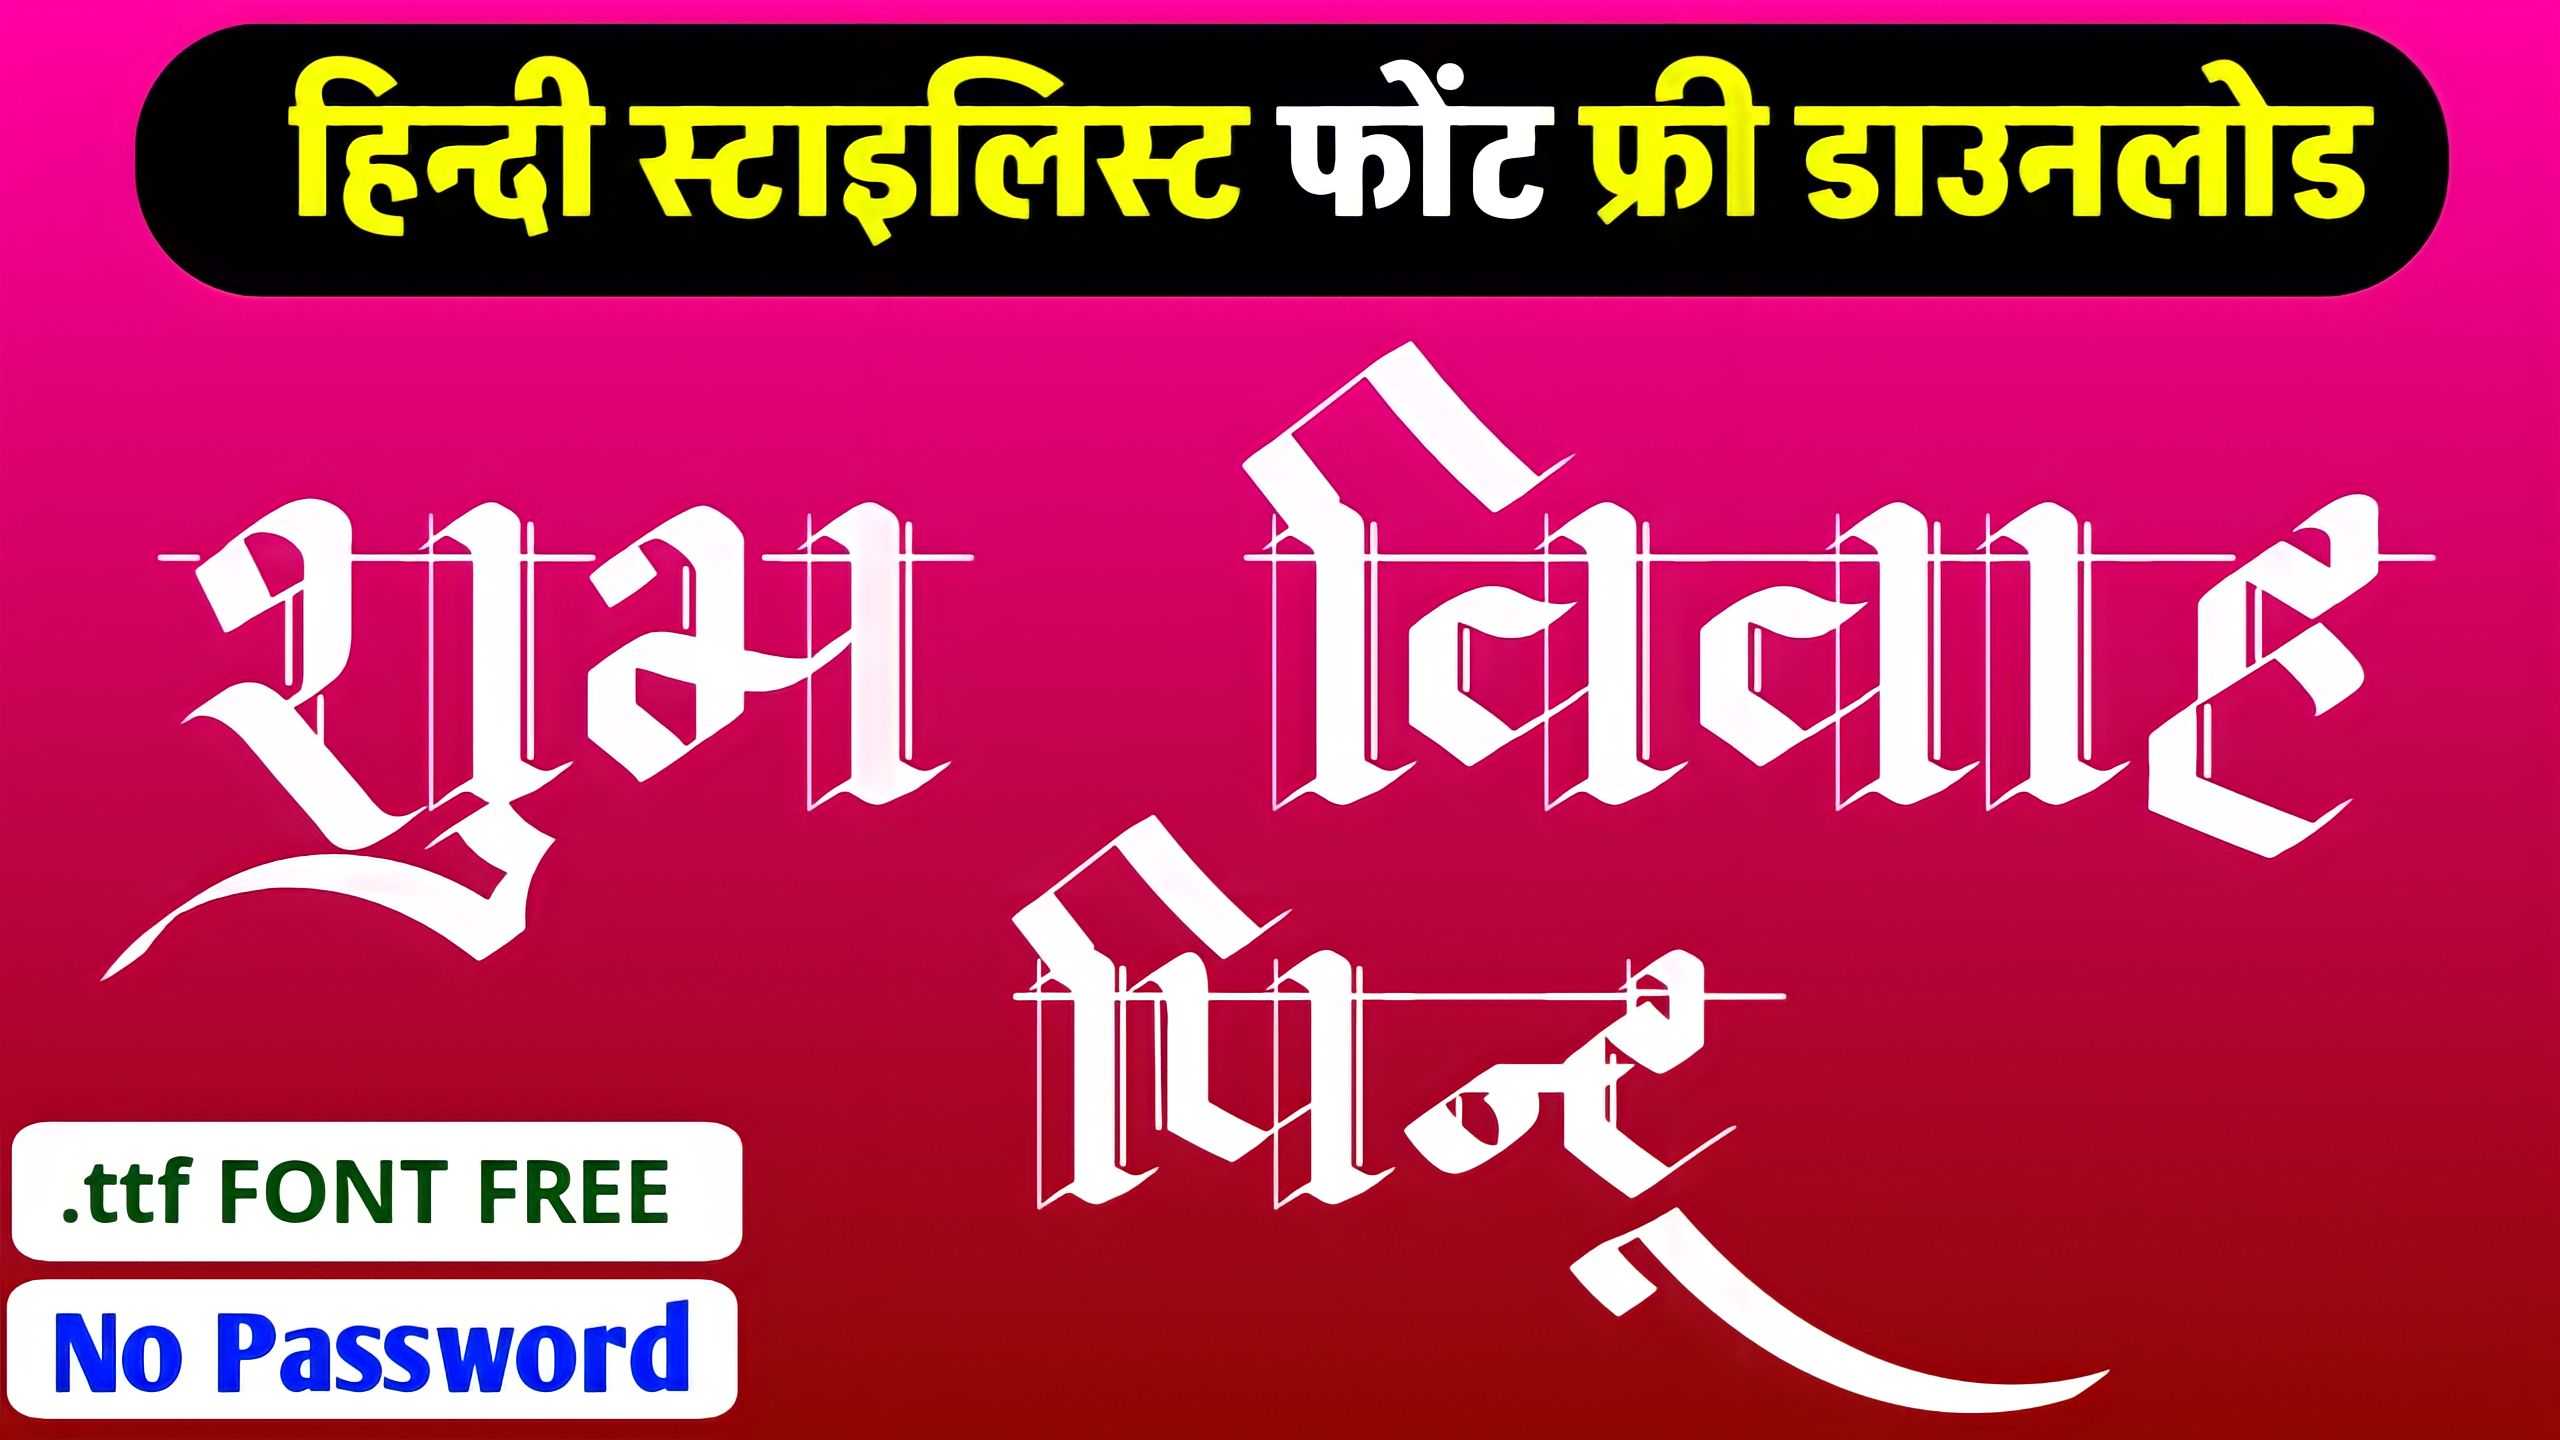 hindi stylish font download kaise karne | Free Hindi fonts download | stylist Hindi font download free